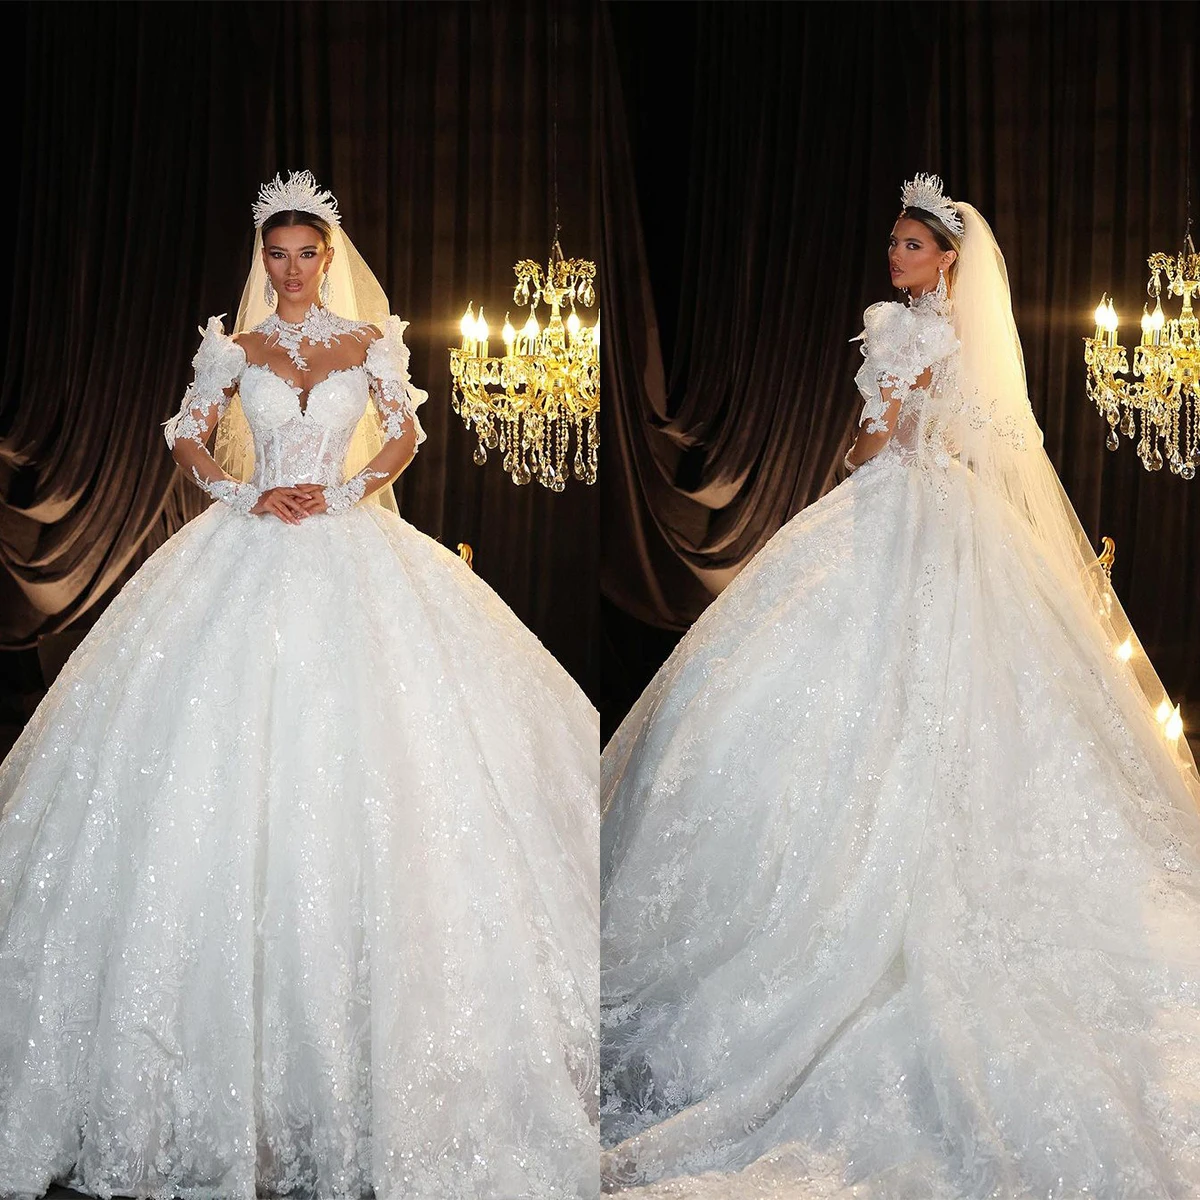 

Exquisite Ball Gown Wedding Dresses Collar Art Design Sweetheart Bridal Gown Lace Applique Beading Dress Vestido De Novia